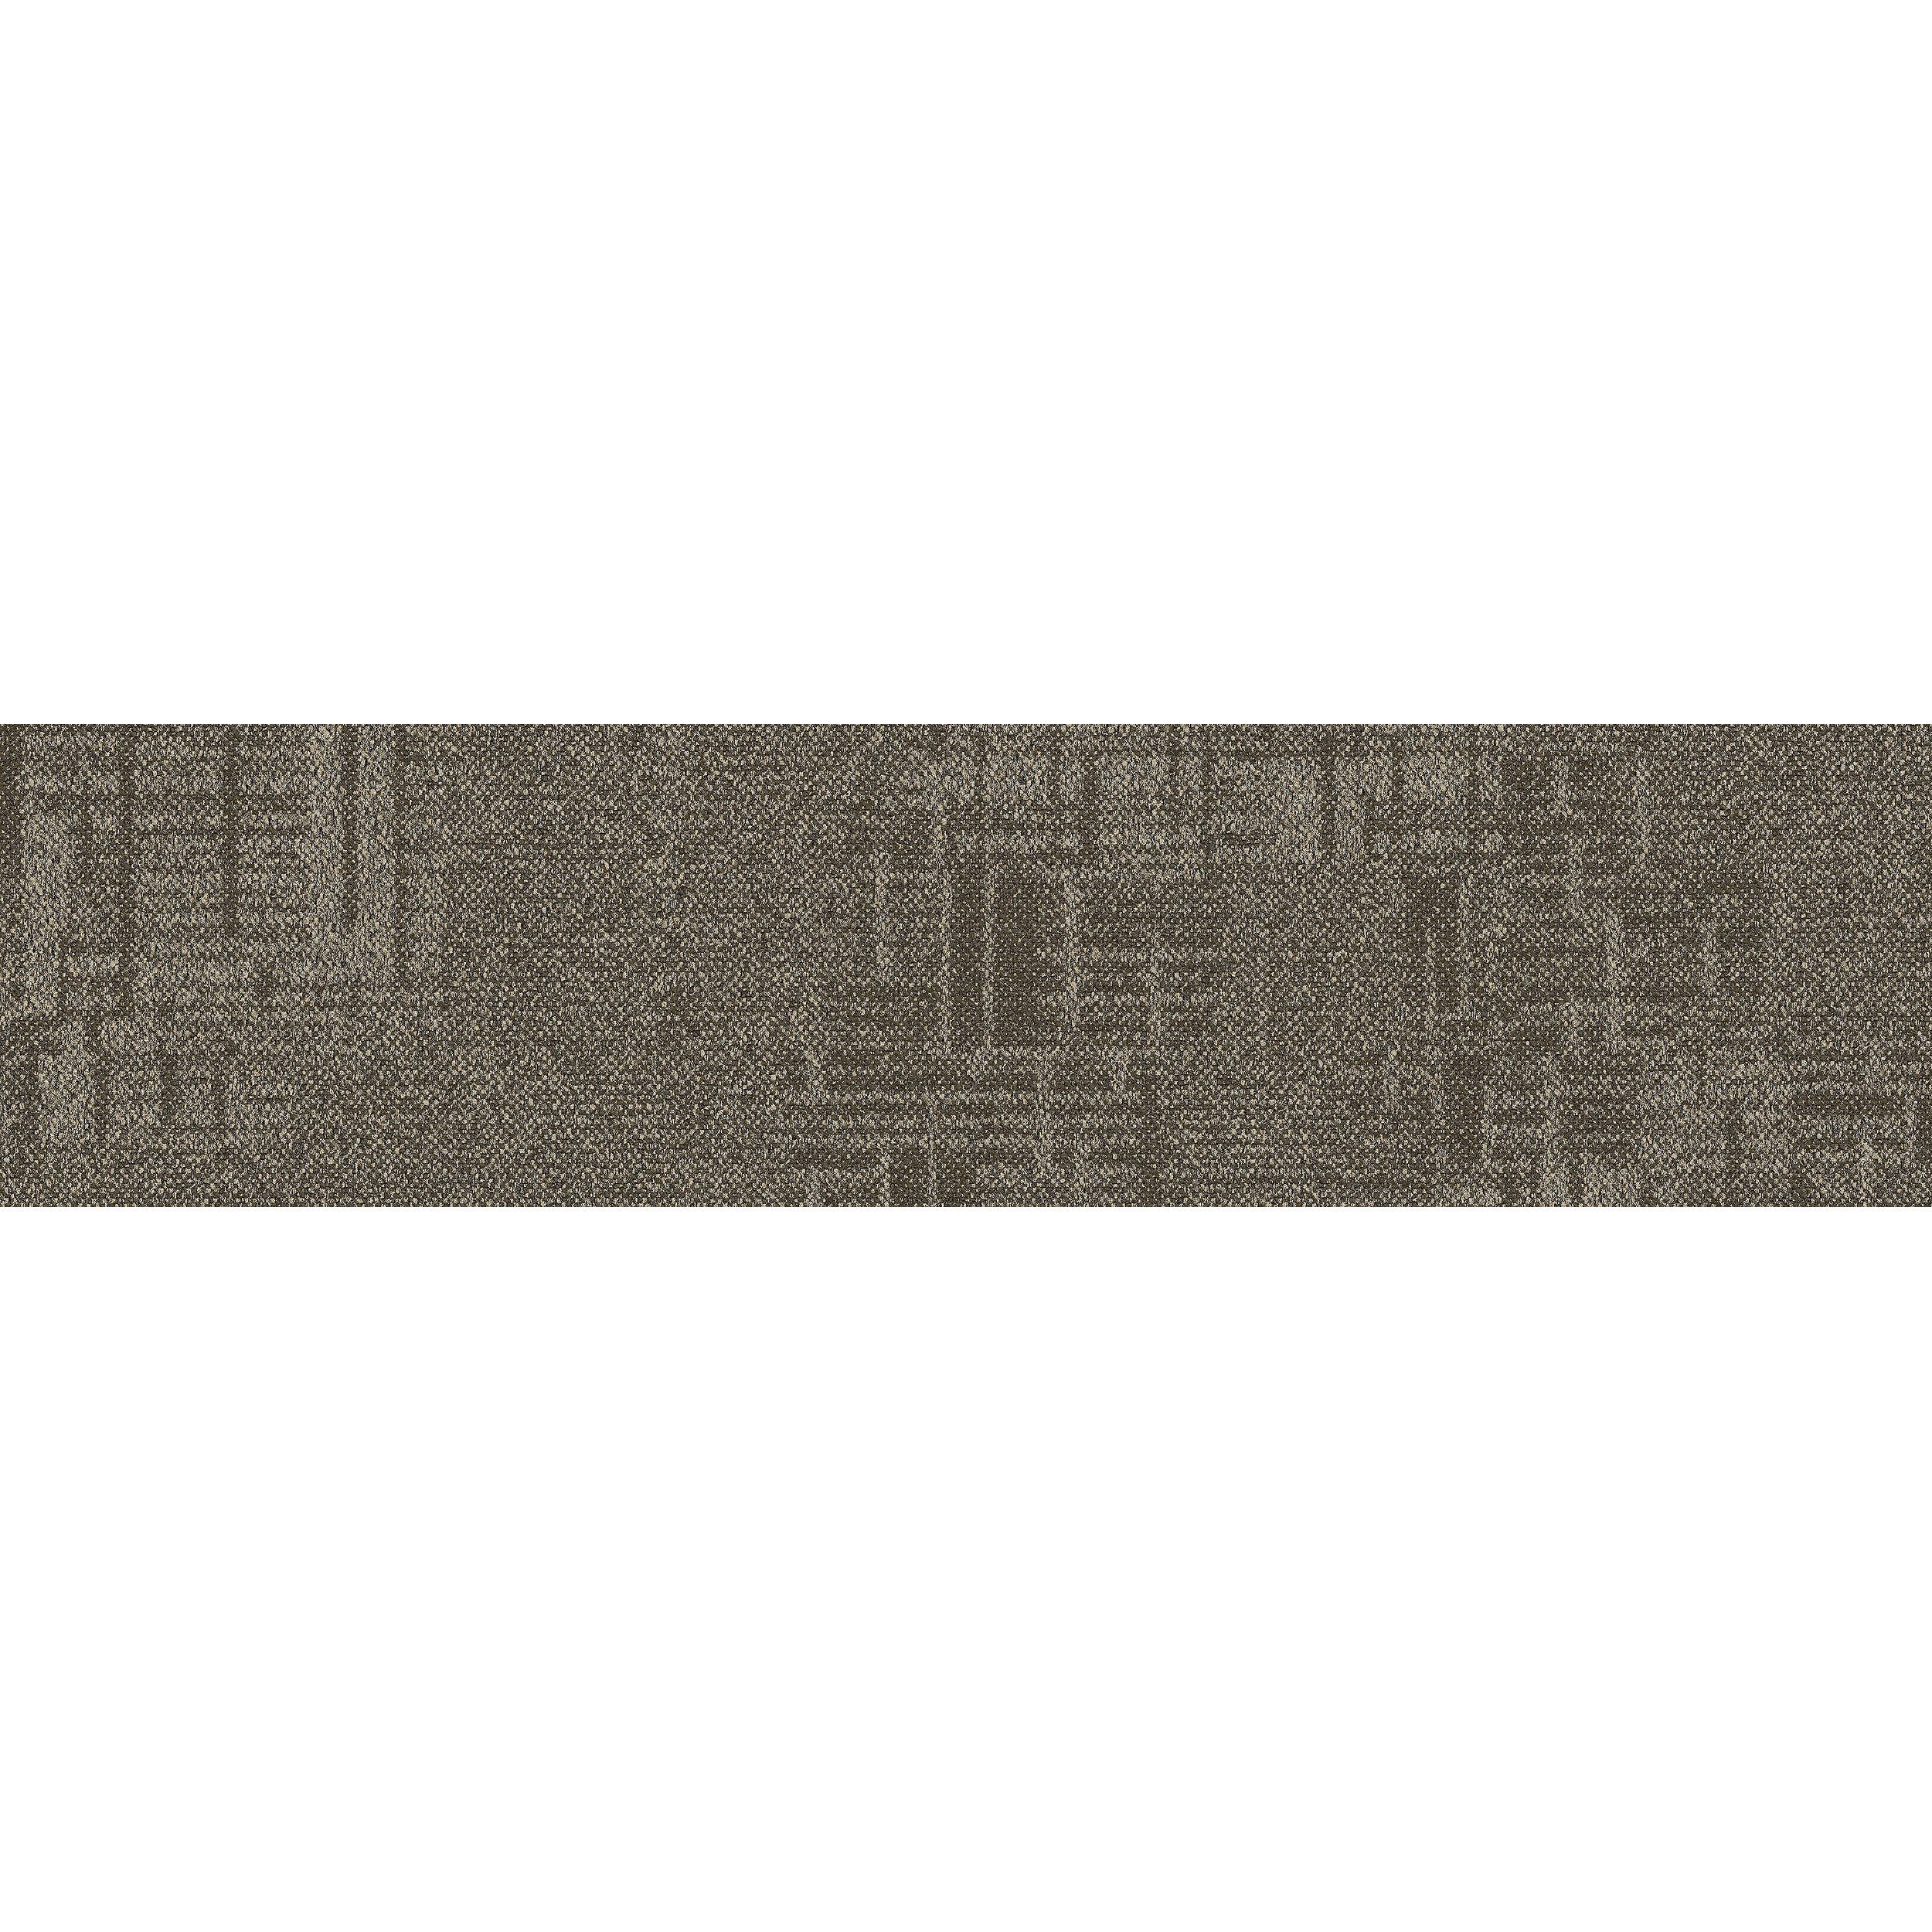 RMS 701 Carpet Tile In Retreat image number 5